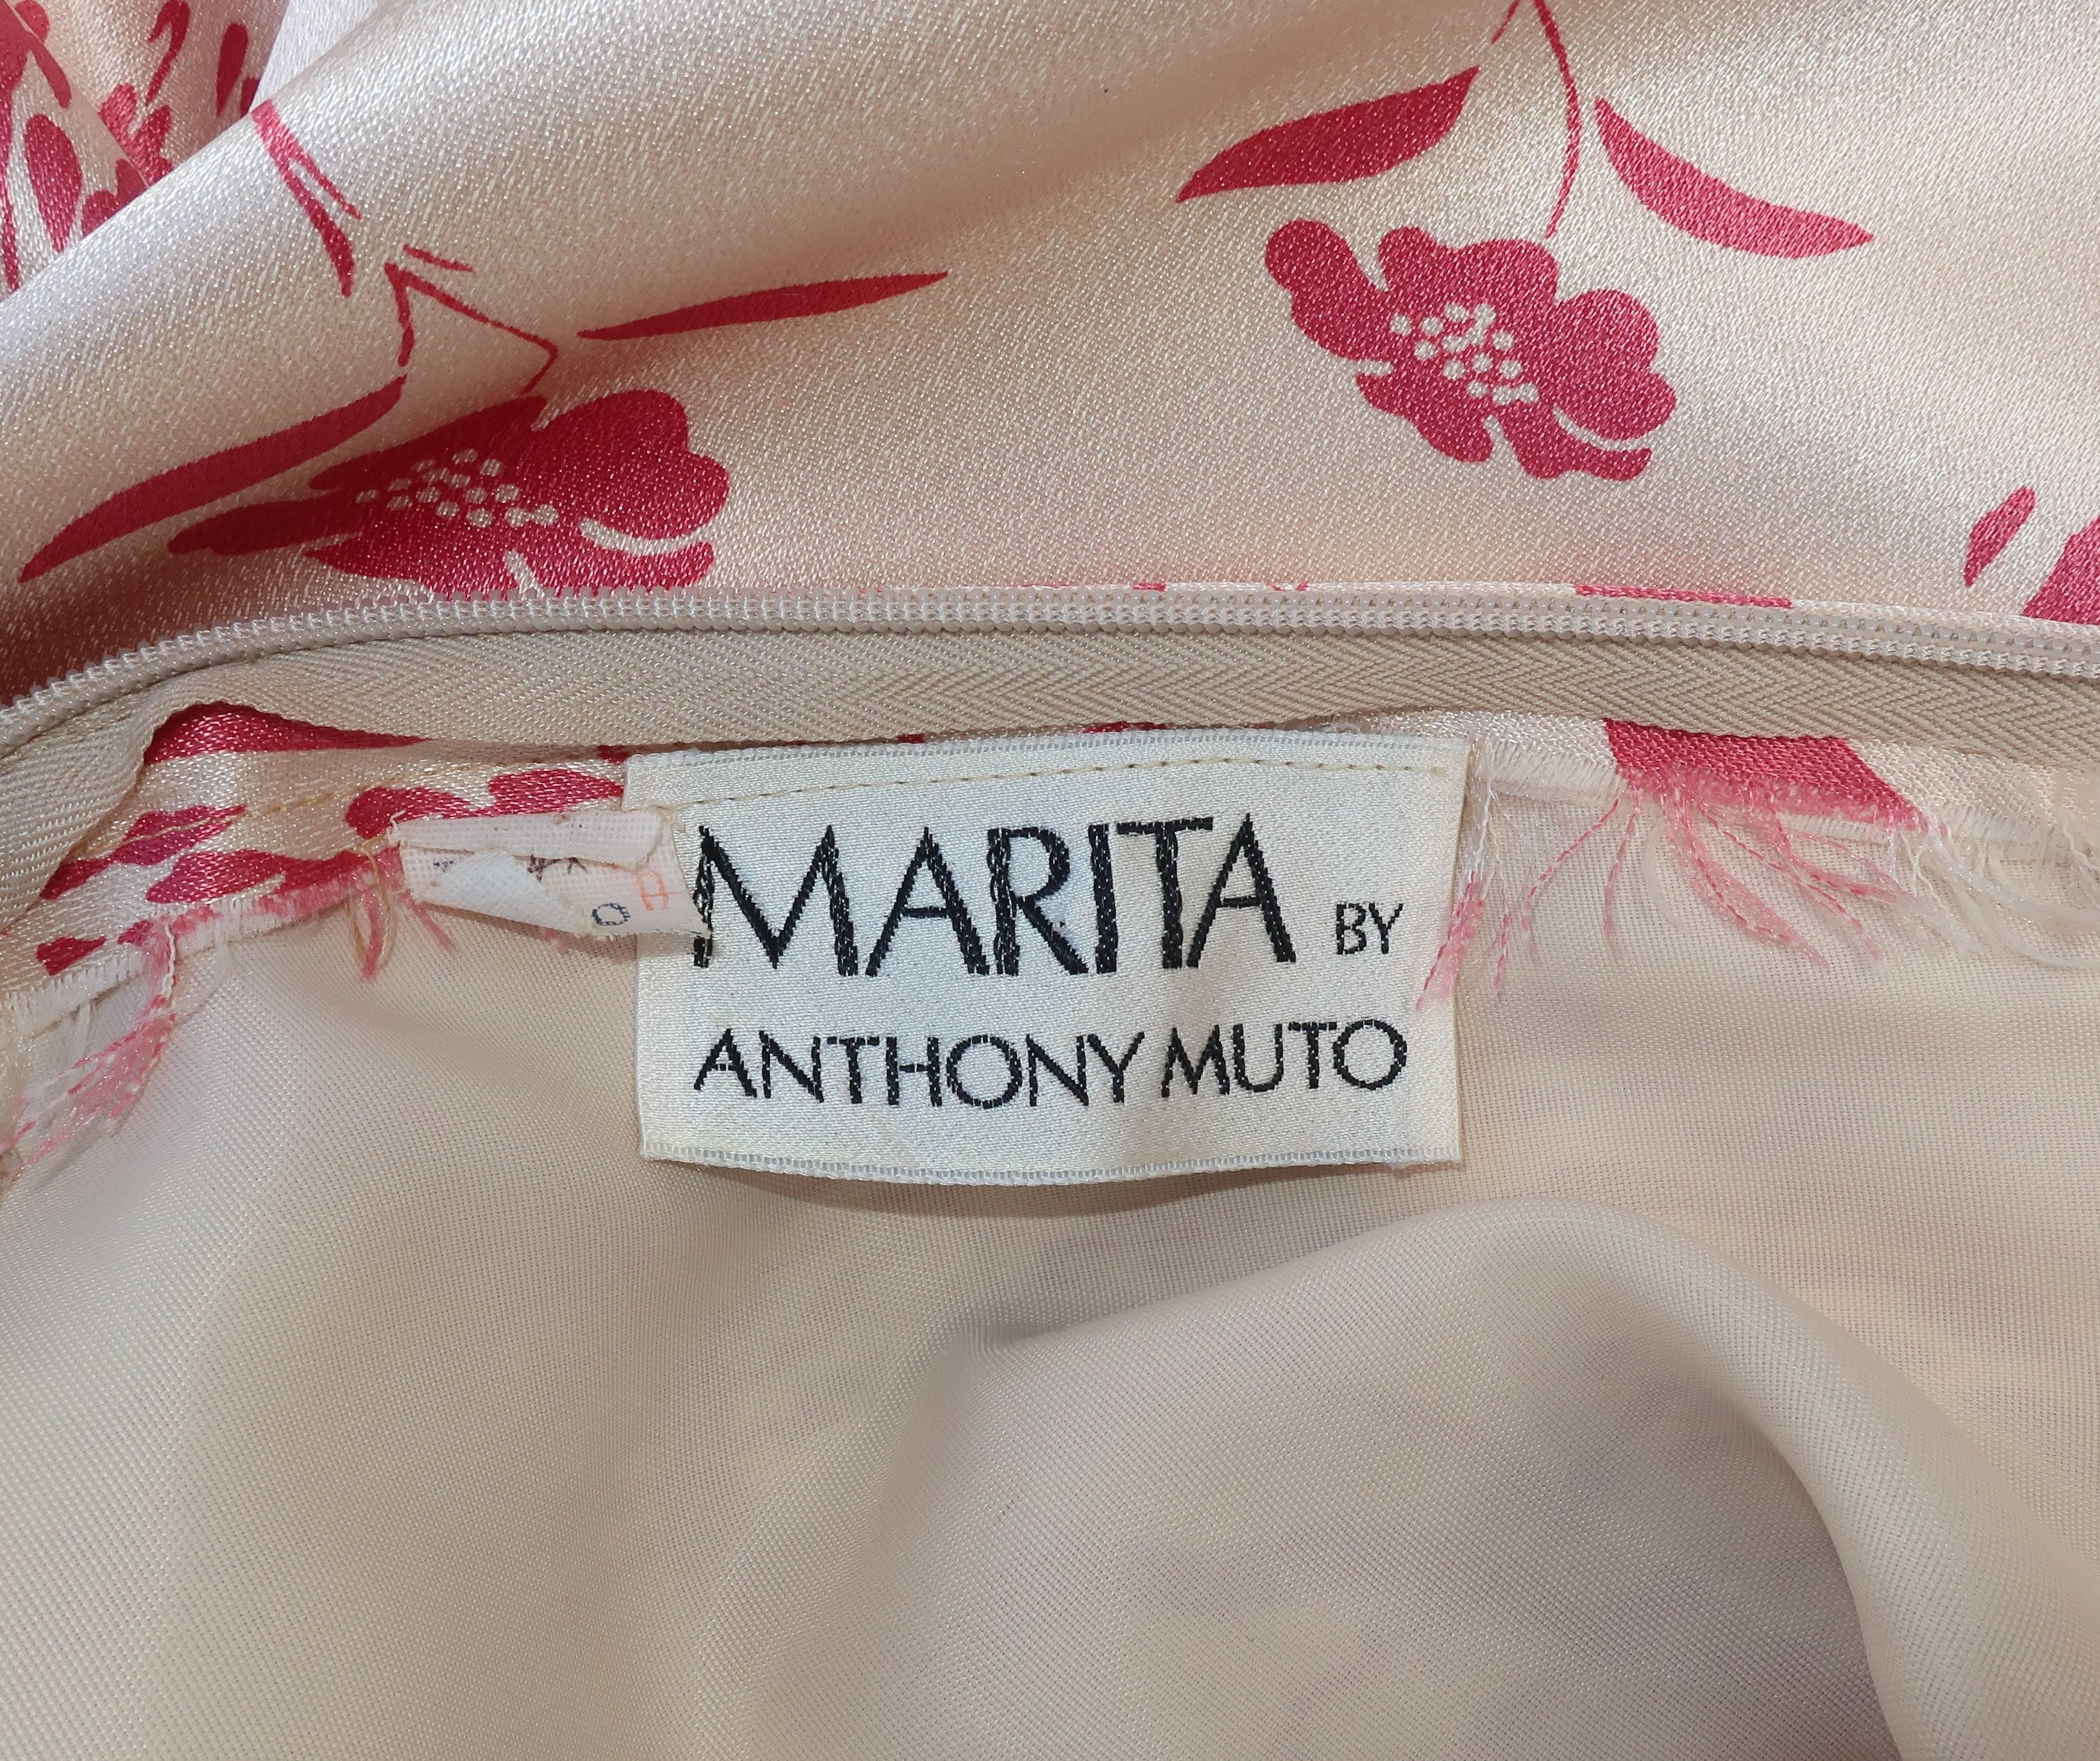 Marita by Anthony Muto Evening Hostess Pajamas, 1970s  6